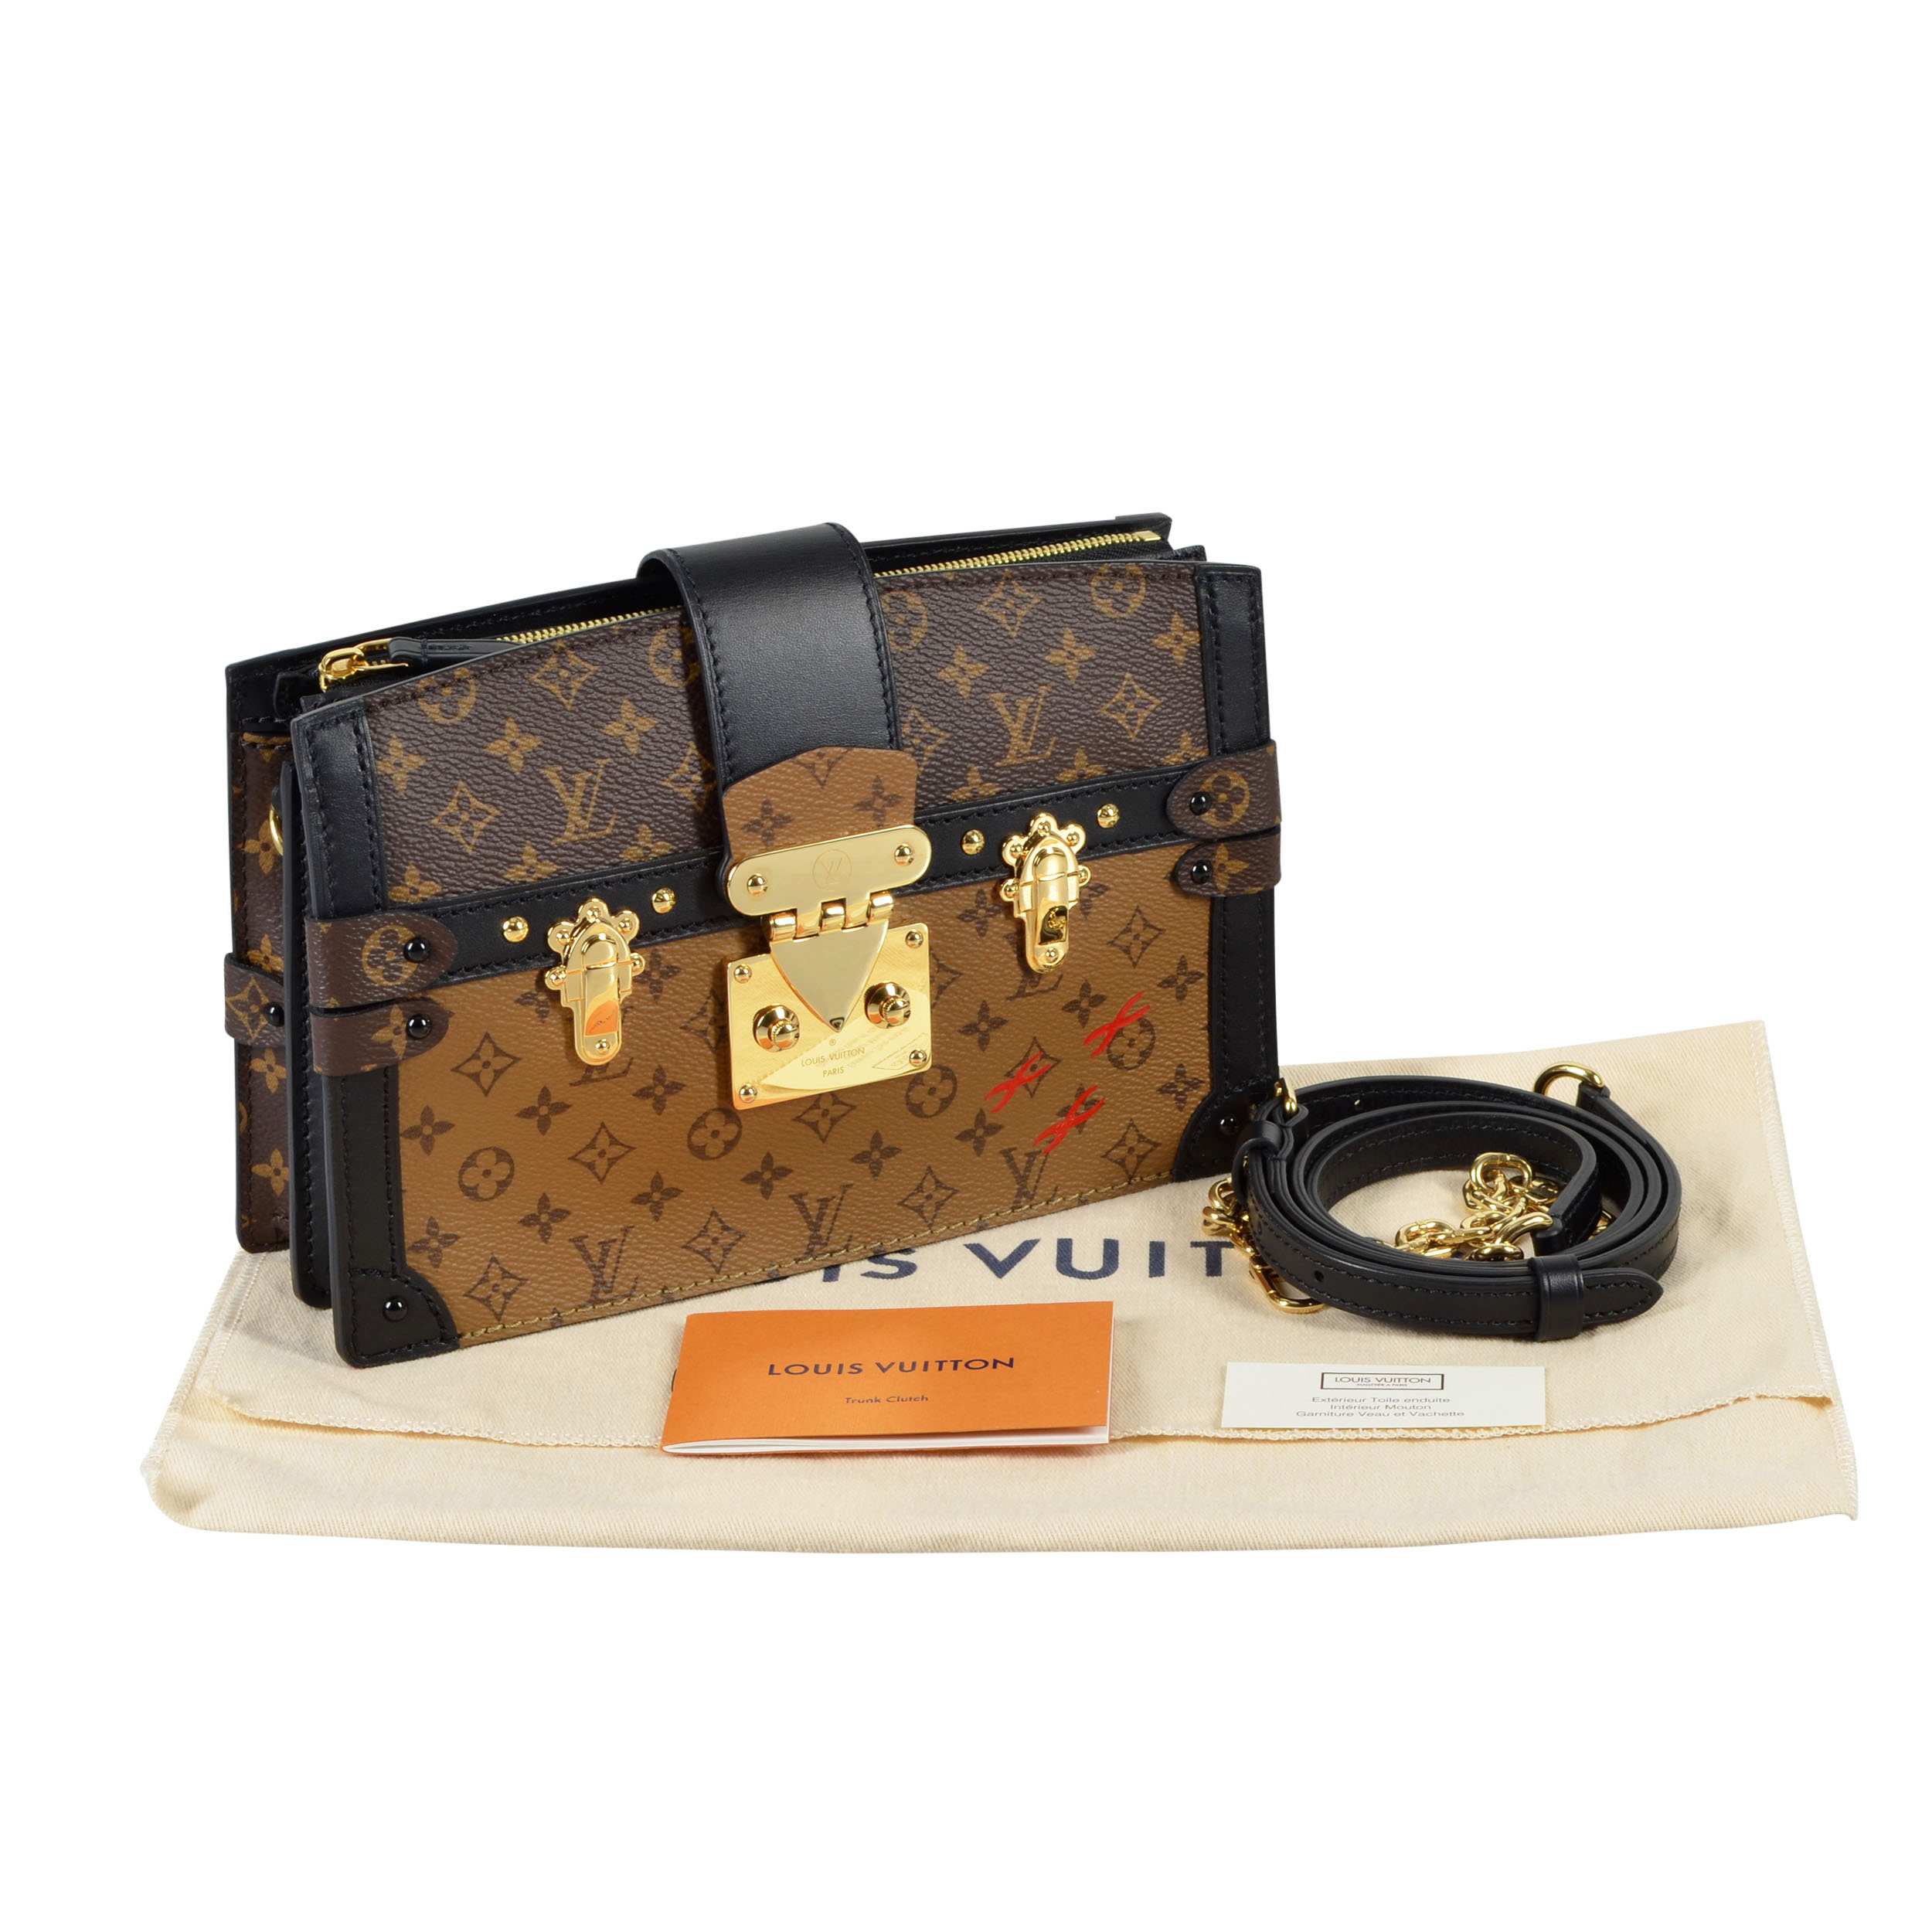 Pre-Owned Louis Vuitton Wallet Trunk Clutch 186434/21